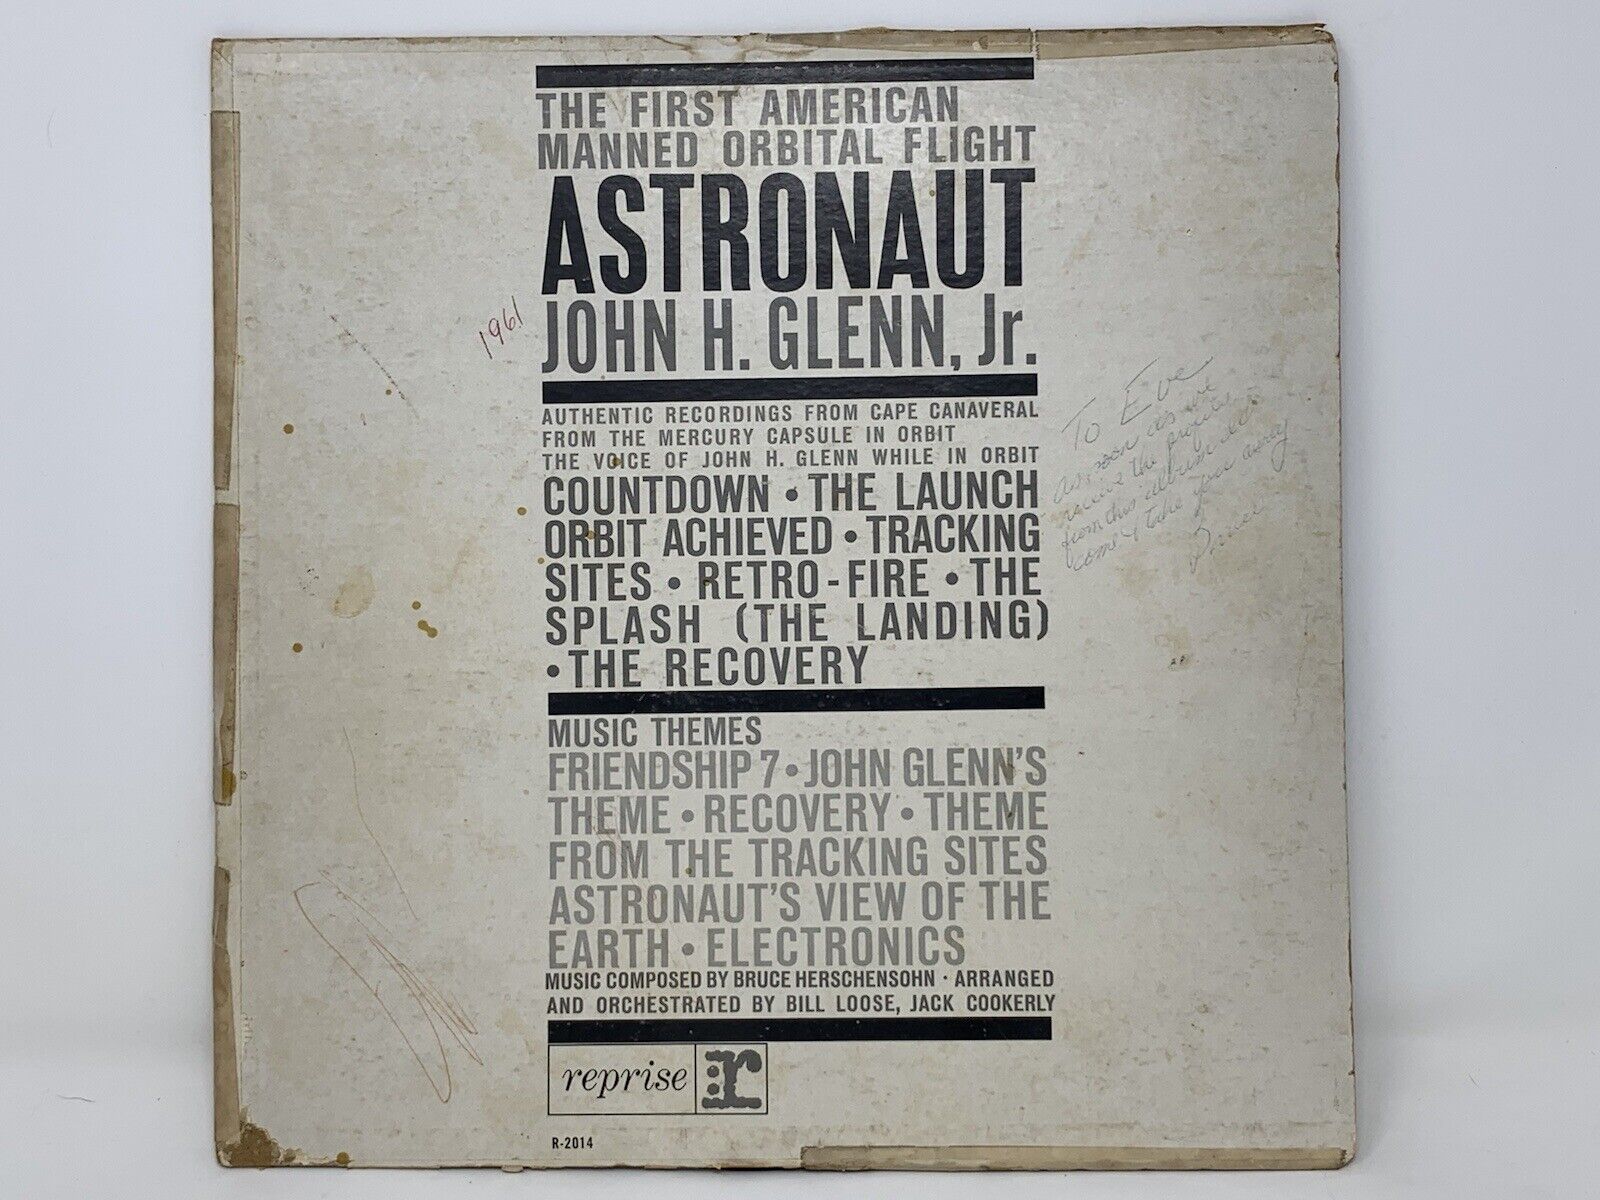 *SIGNED* Astronaut John H. Glenn First American Manned Orbital Flight Reprise LP